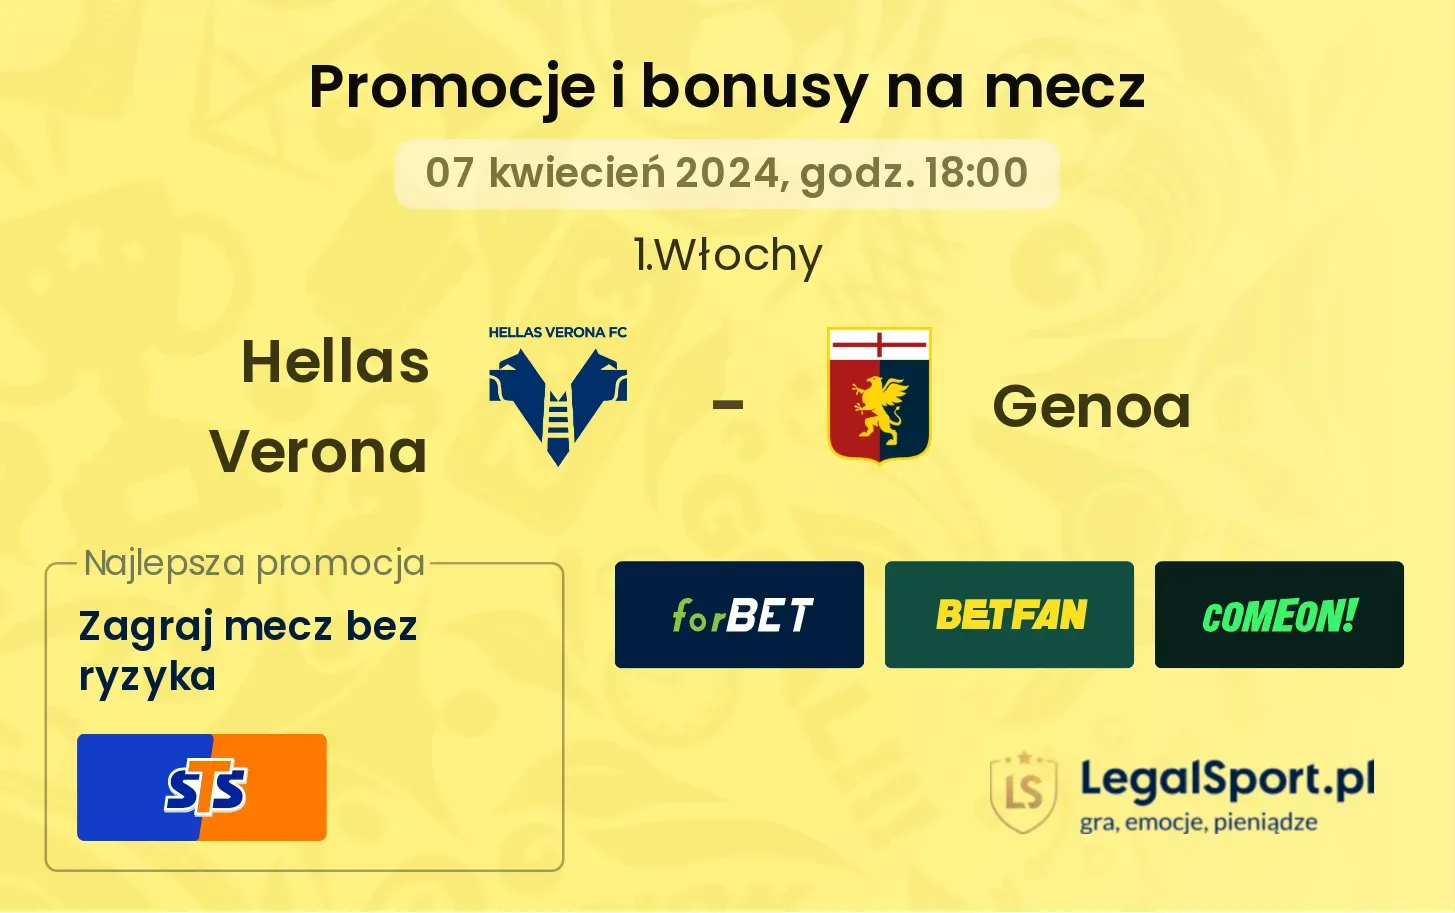 Hellas Verona - Genoa promocje bonusy na mecz